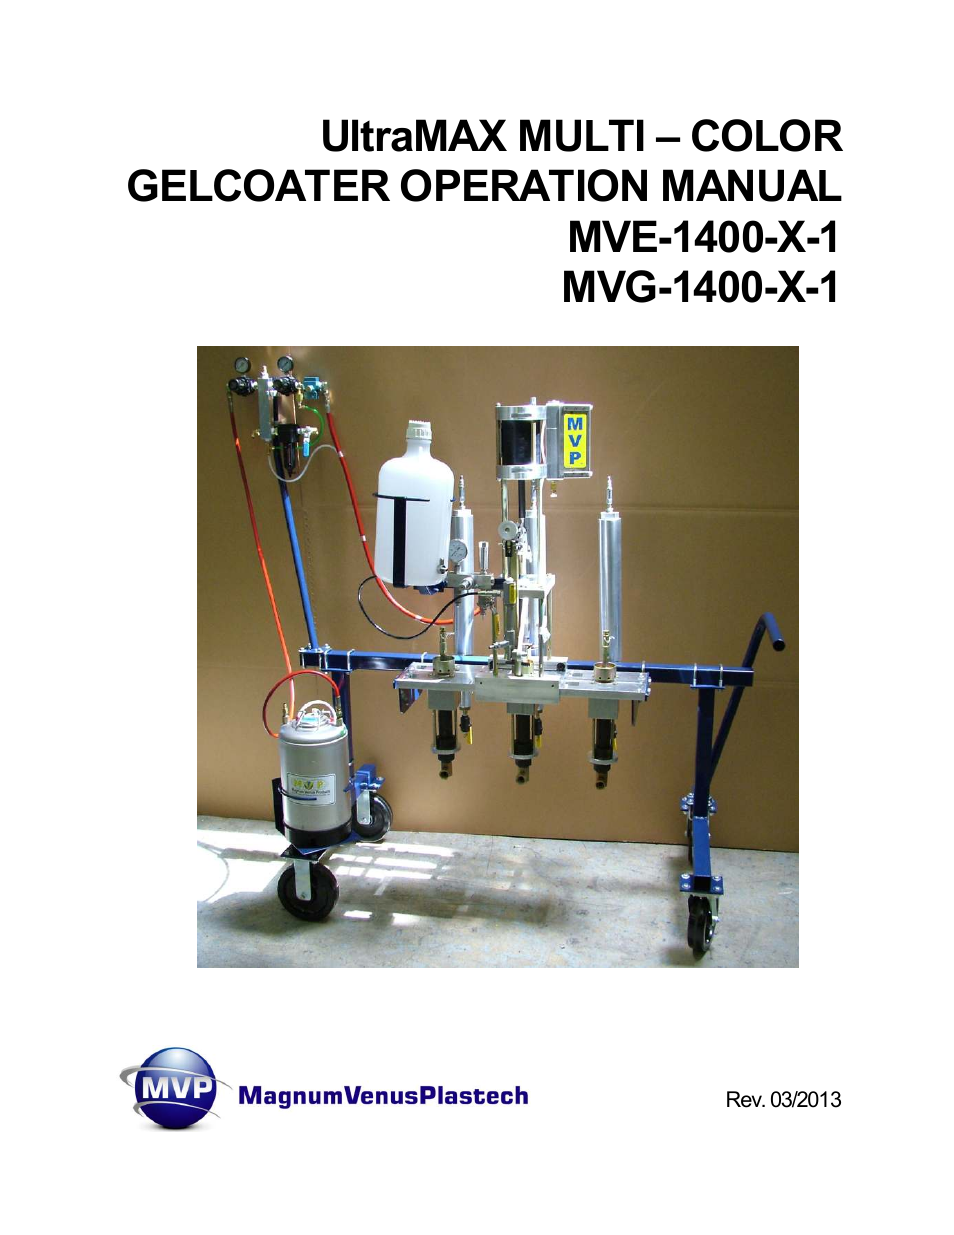 UltraMAX MULTI–COLOR GELCOATER MVE-1400-X-1